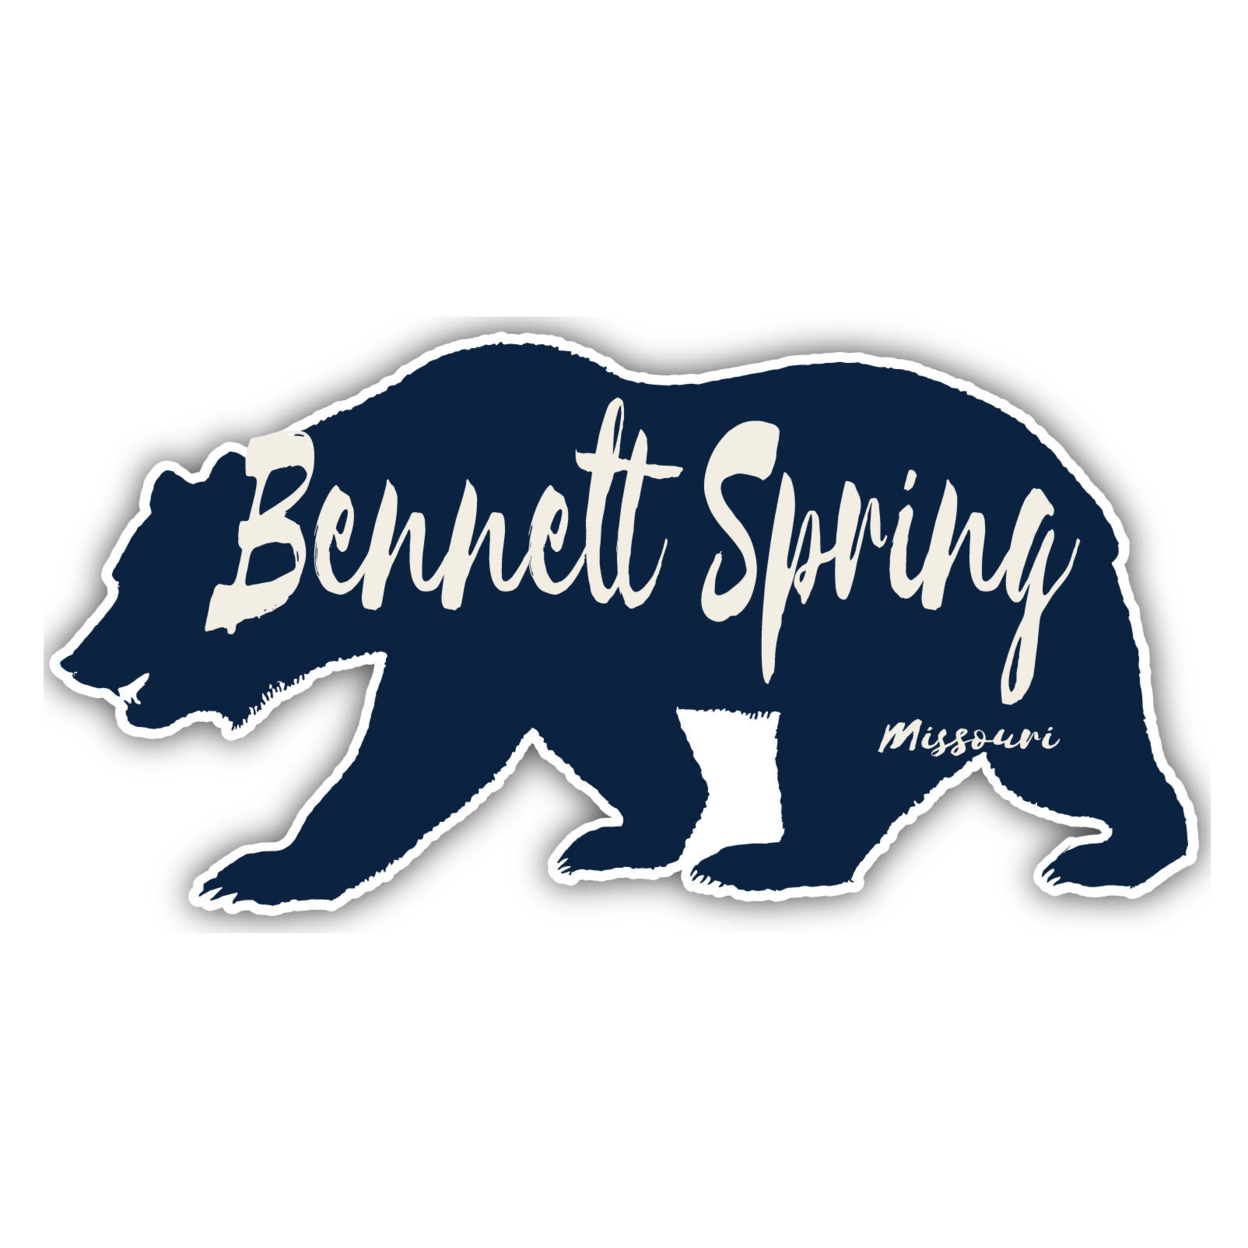 Bennett Spring Missouri Souvenir Decorative Stickers (Choose Theme And Size) - 4-Pack, 8-Inch, Bear